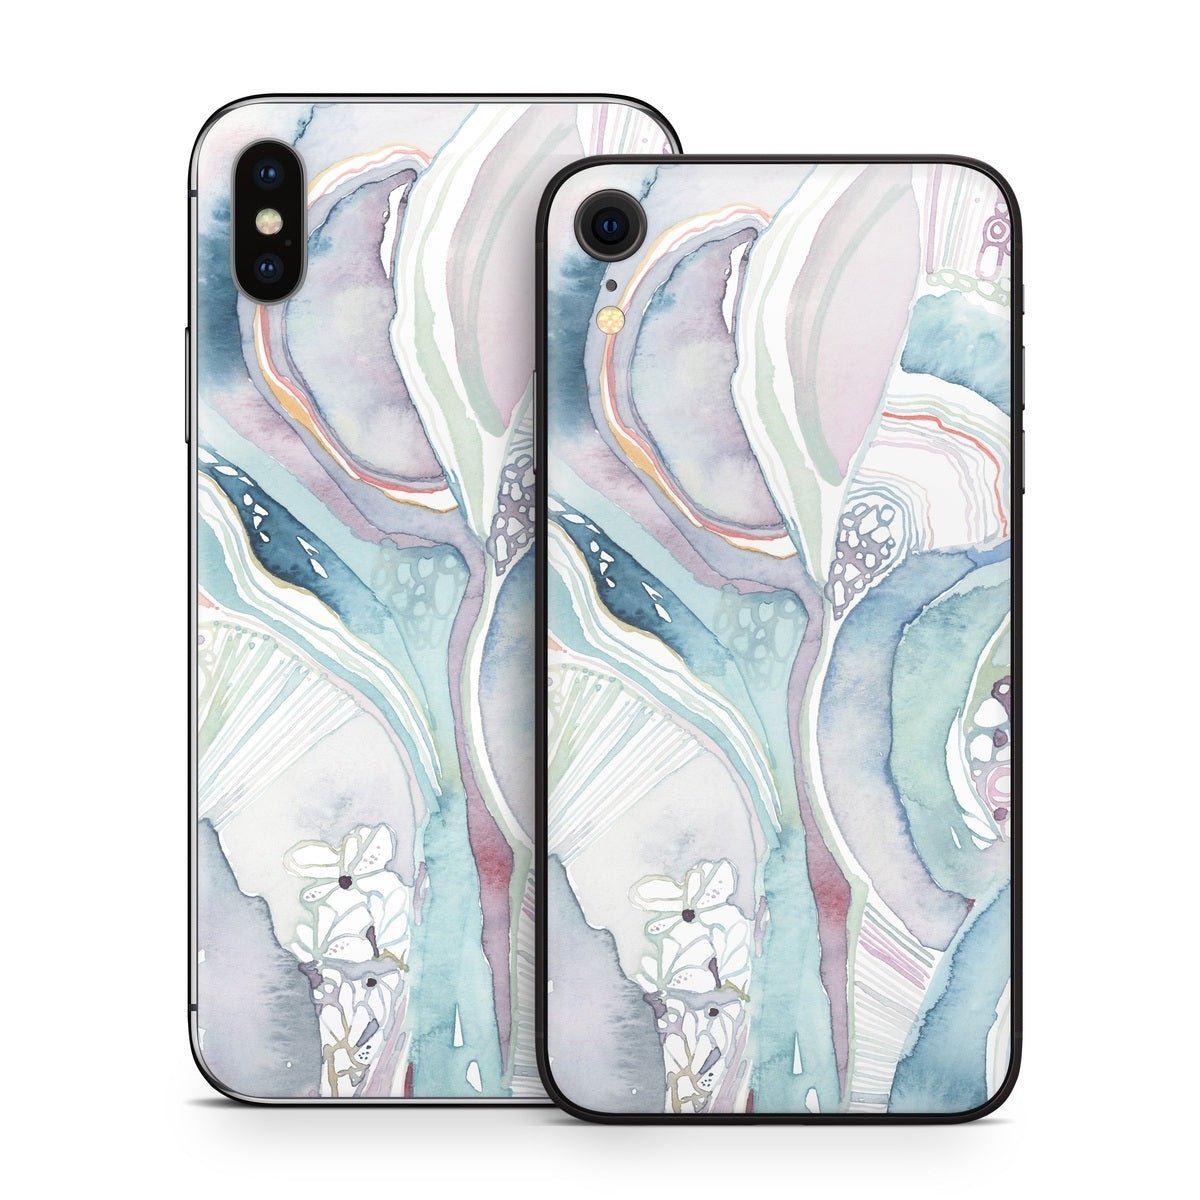 Abstract Organic - Apple iPhone X Skin - Shell Rummel - DecalGirl